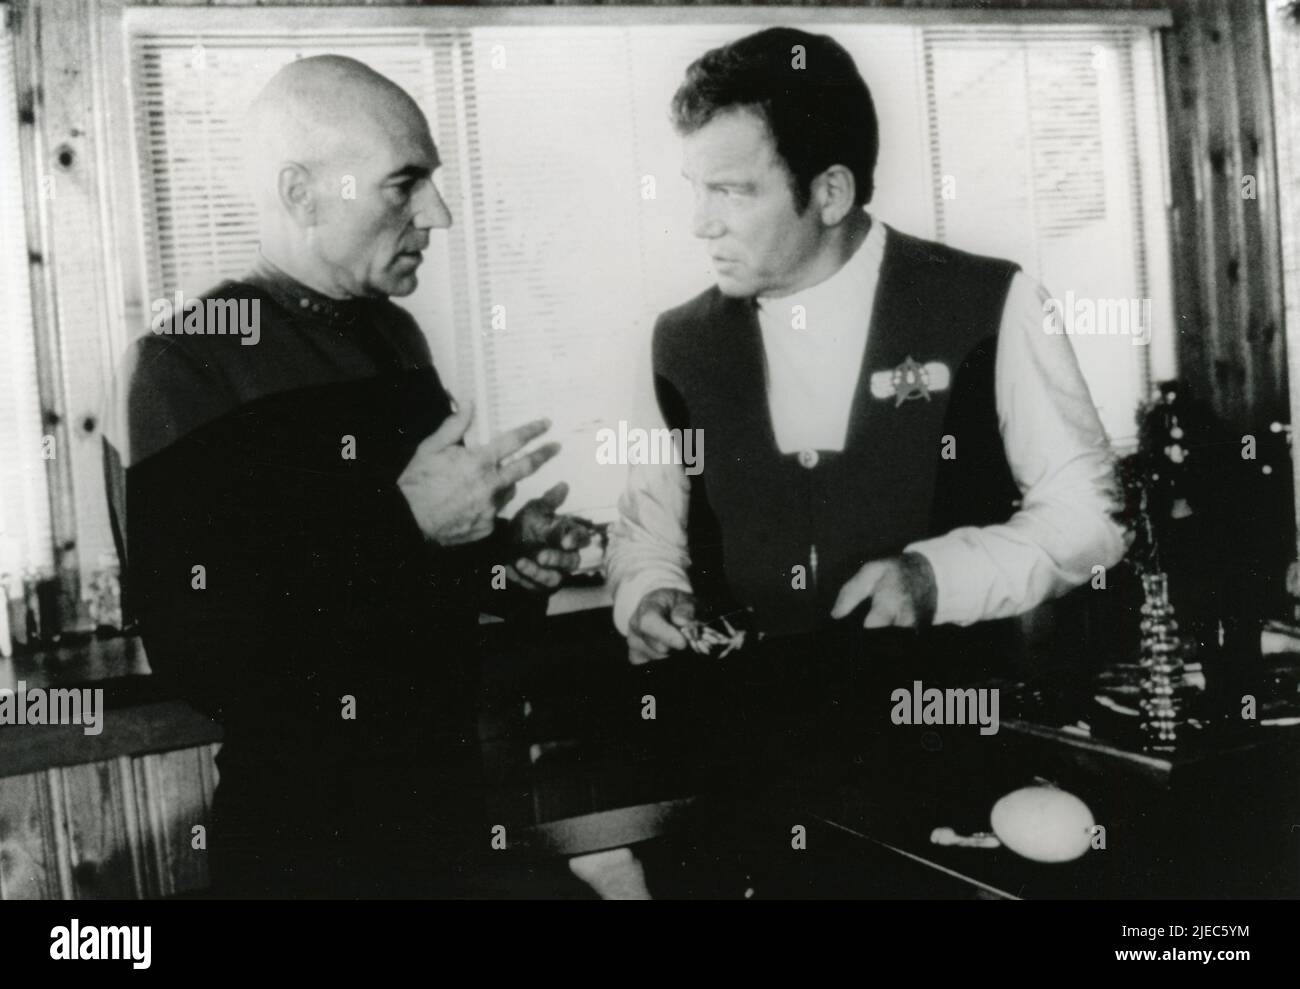 Actors Patrick Stewart and William Shatner in the movie Star Trek VII: Generations, USA 1994 Stock Photo